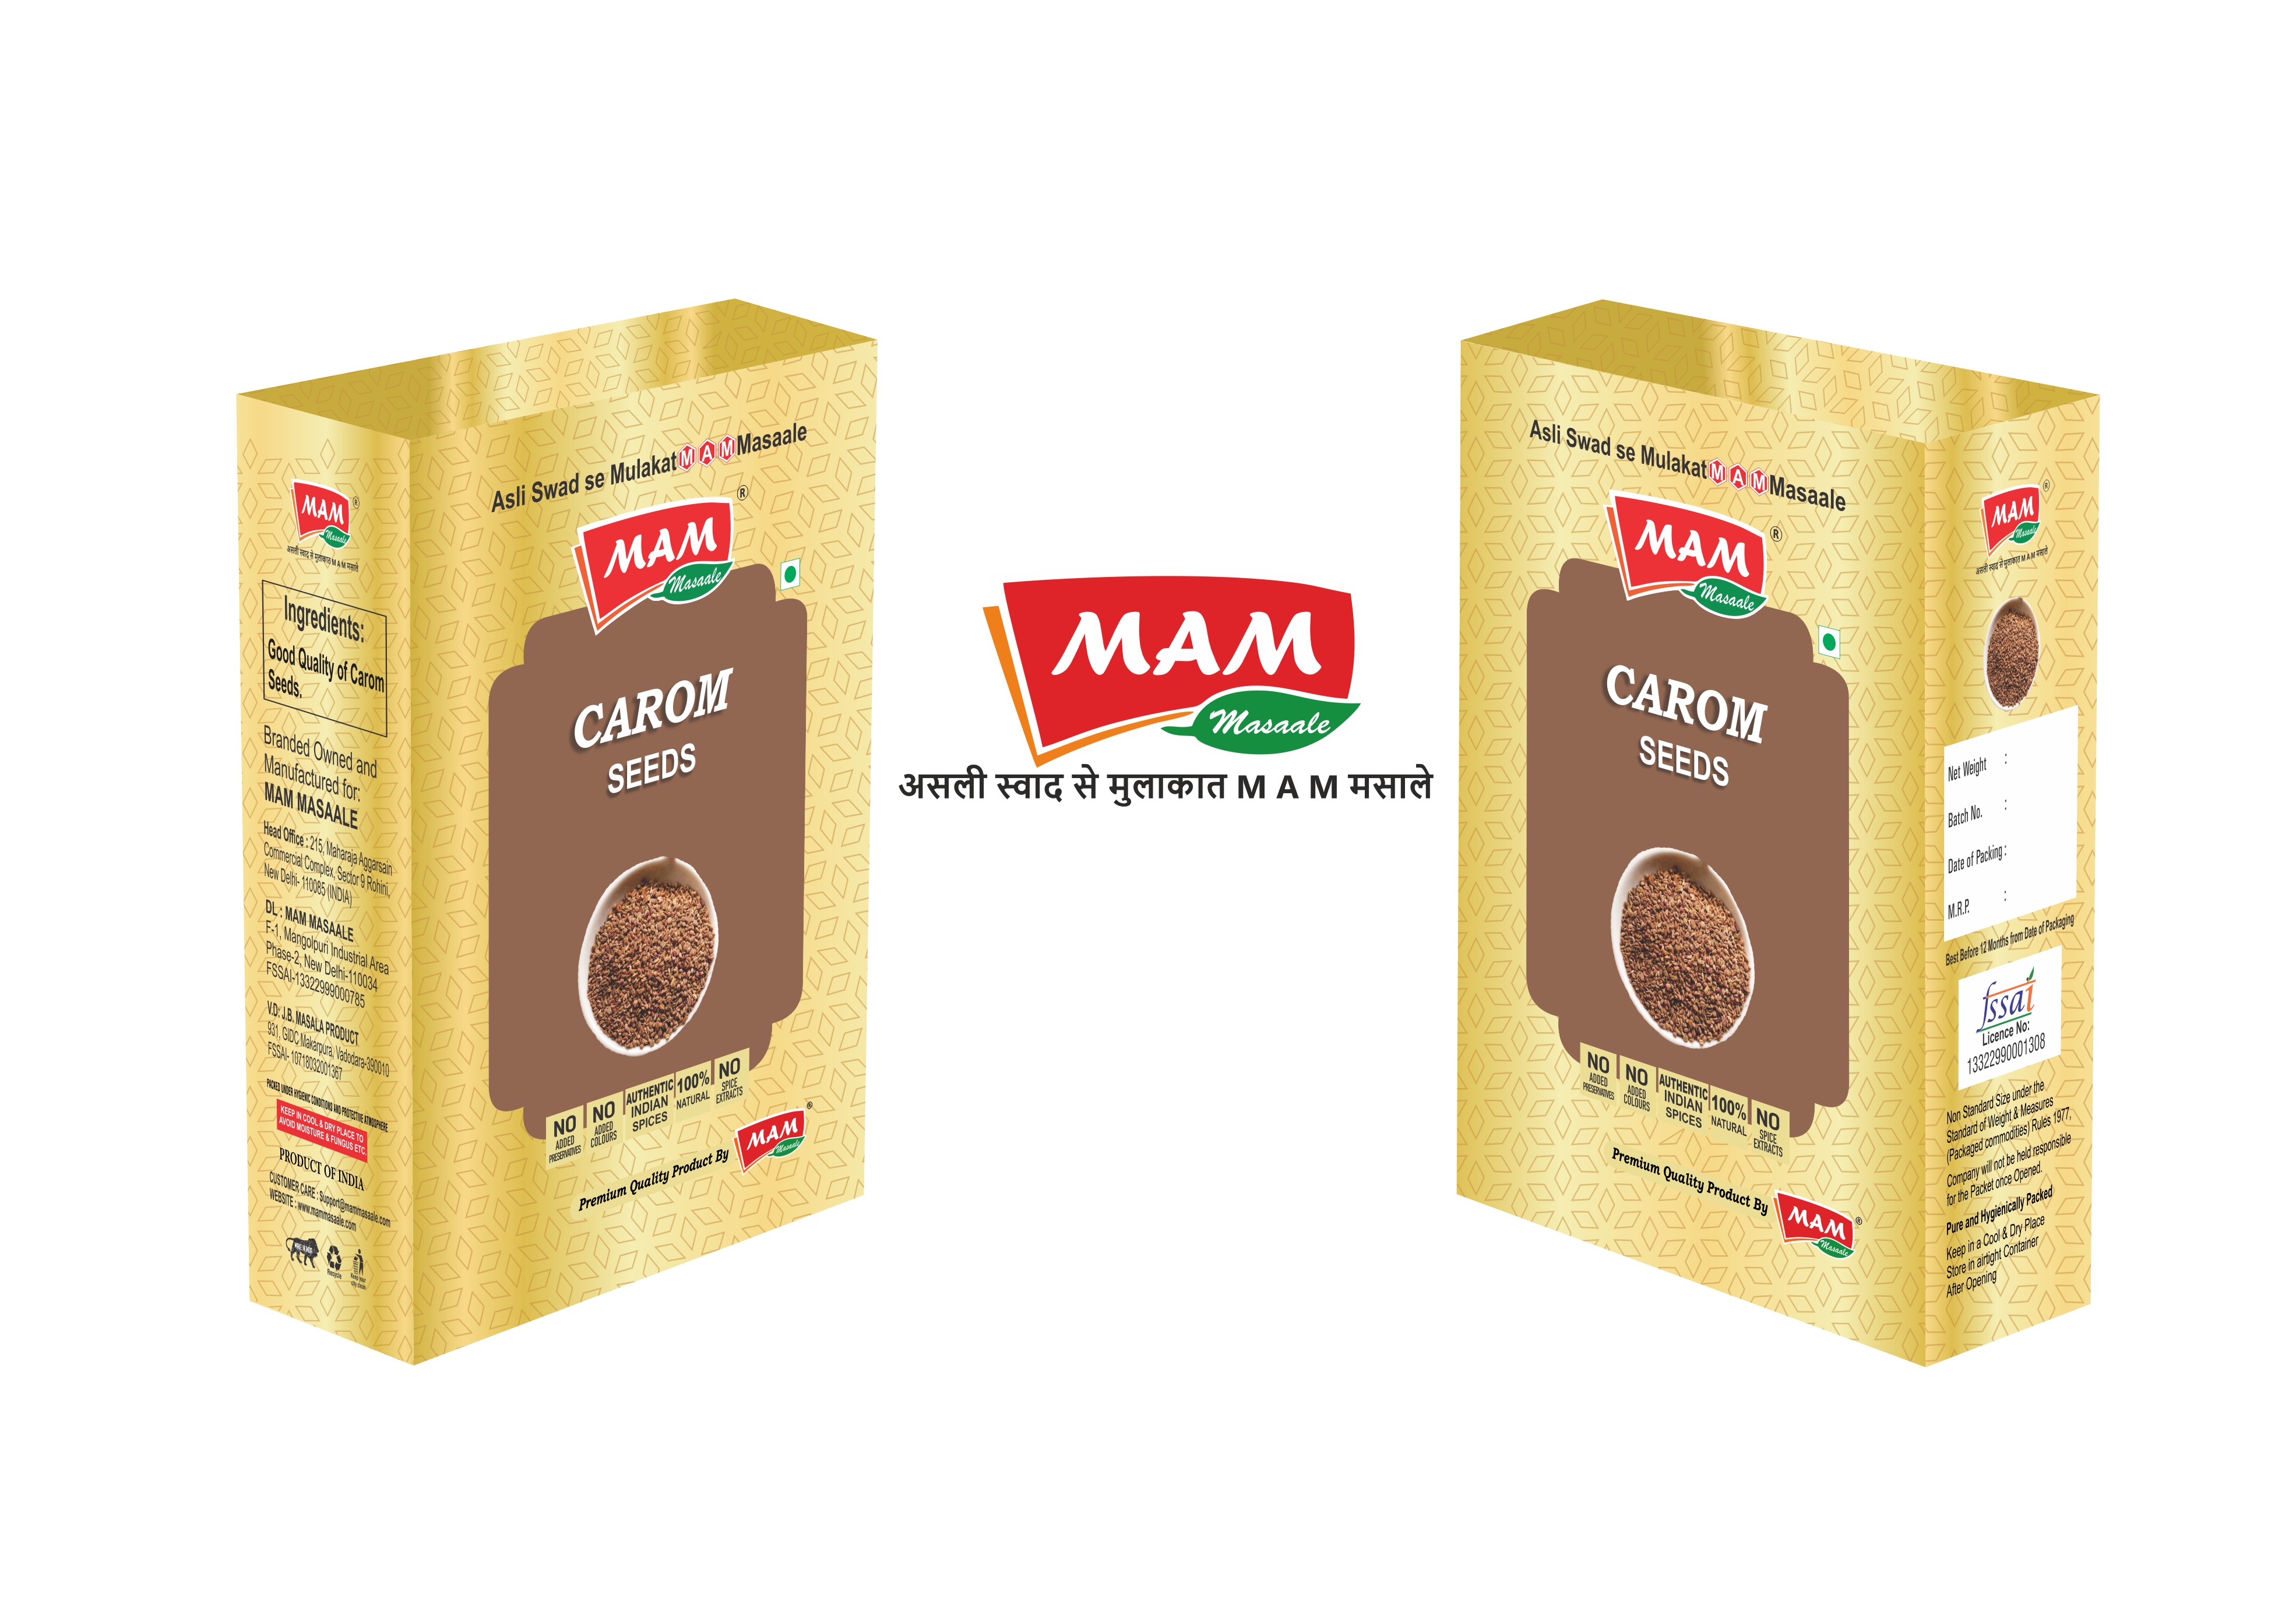 Carom Seeds | Masala Companies | Spice Indian - Mammasaale